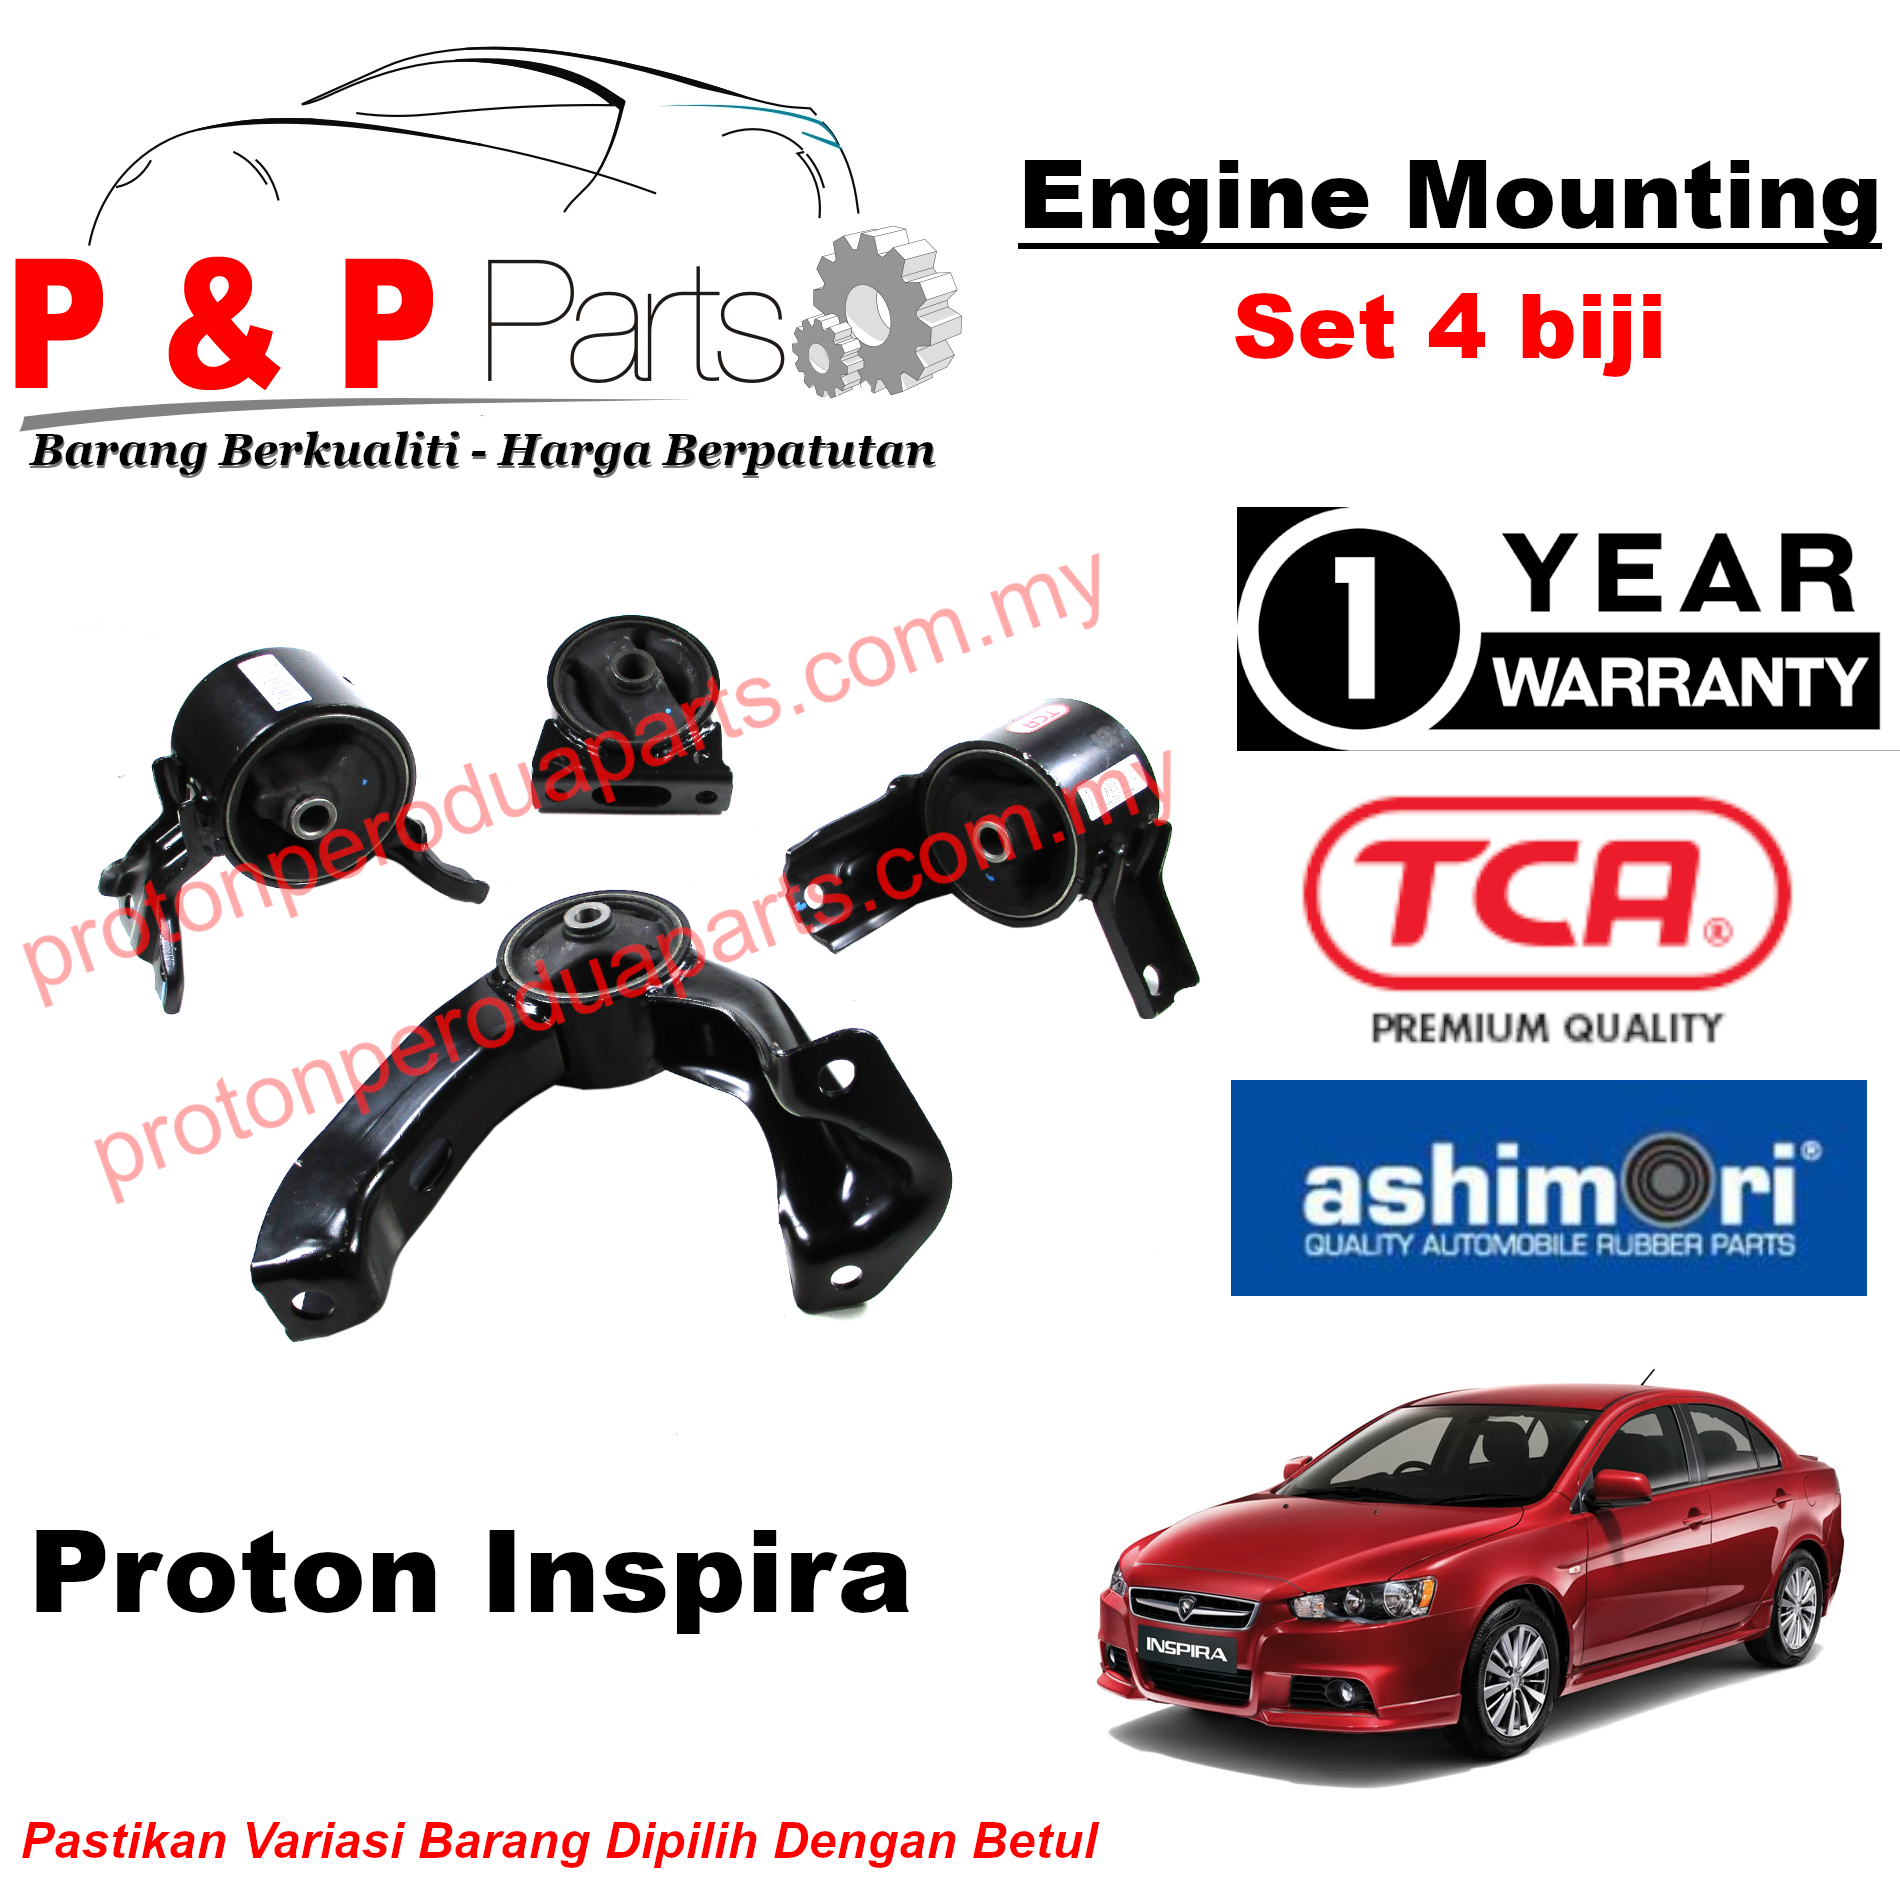 Engine Mounting Set For Proton Inspira 1.8 2.0 - 1 Year ...